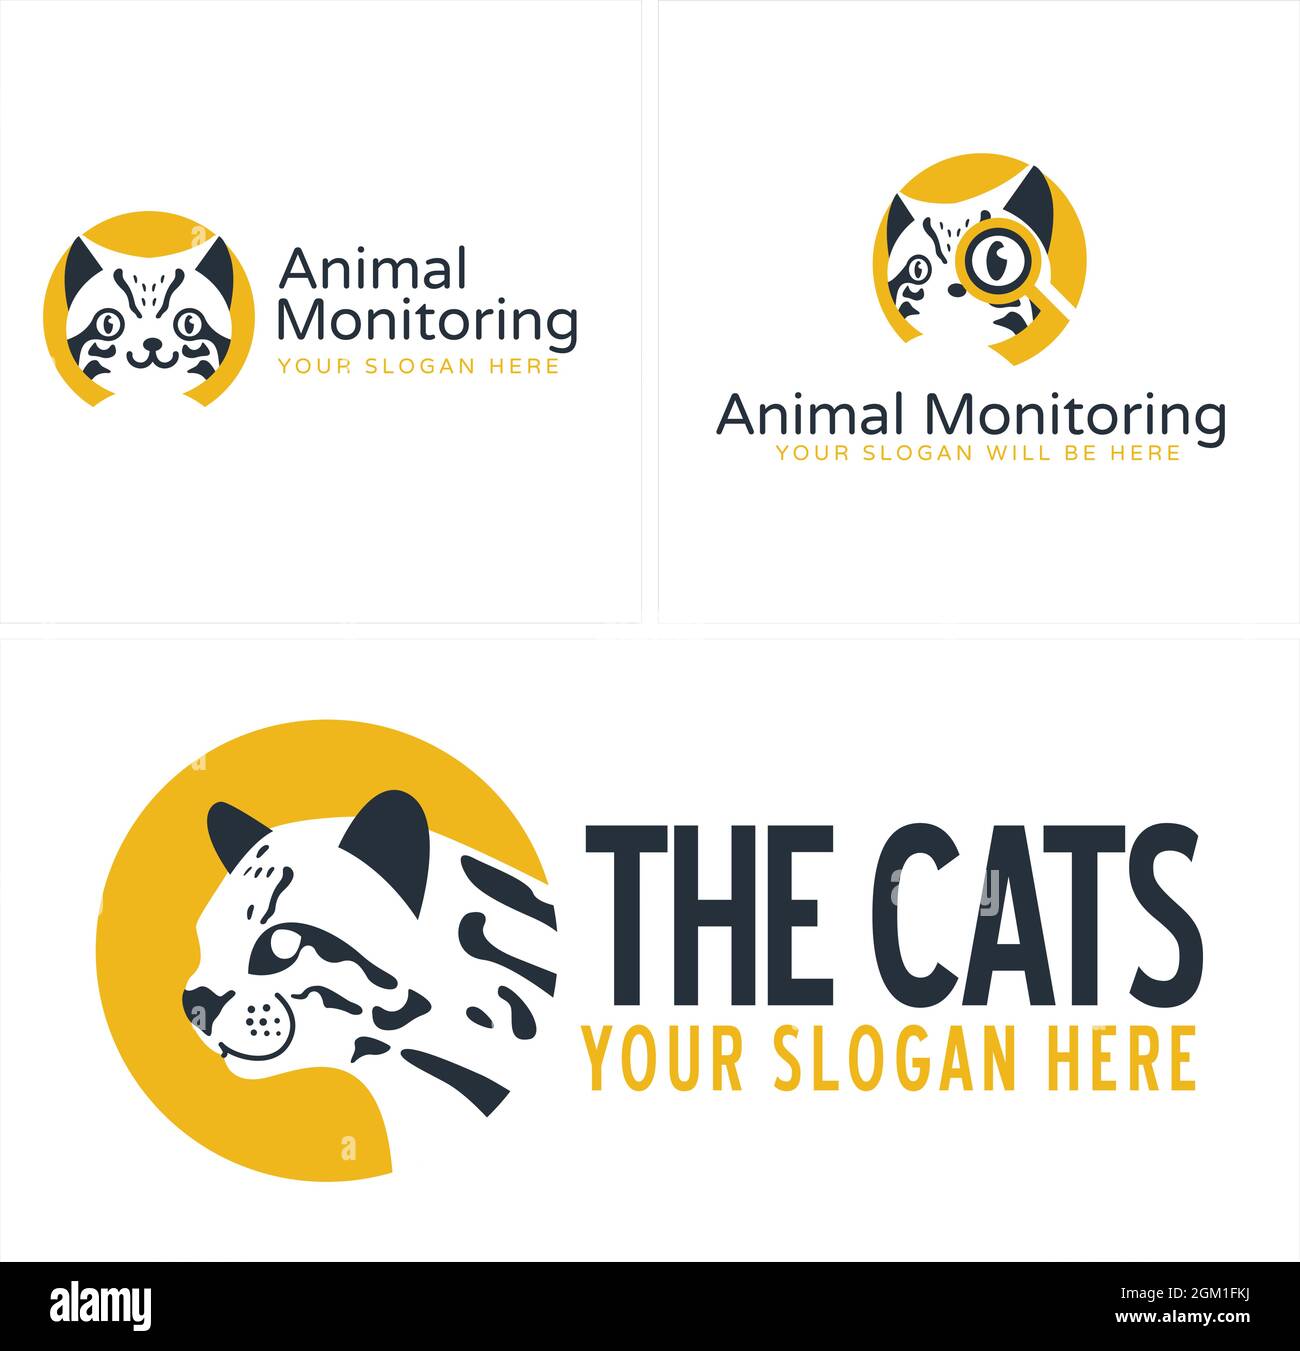 Animal monitoring cats icon logo design Stock Vector